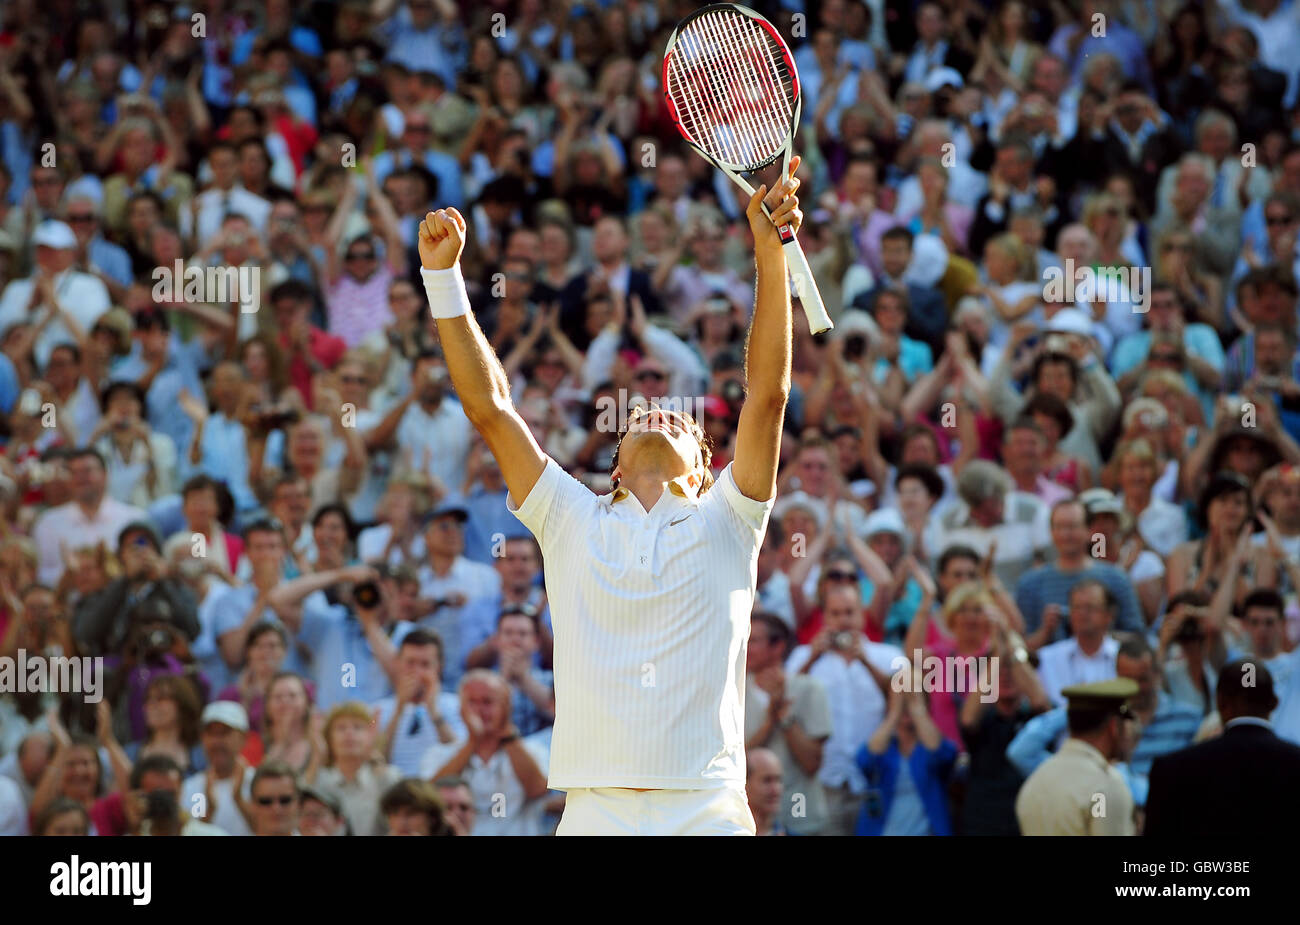 Der Schweizer Roger Federer feiert seinen Sieg bei den Wimbledon Championships im All England Lawn Tennis und Croquet Club, Wimbledon, London. Stockfoto